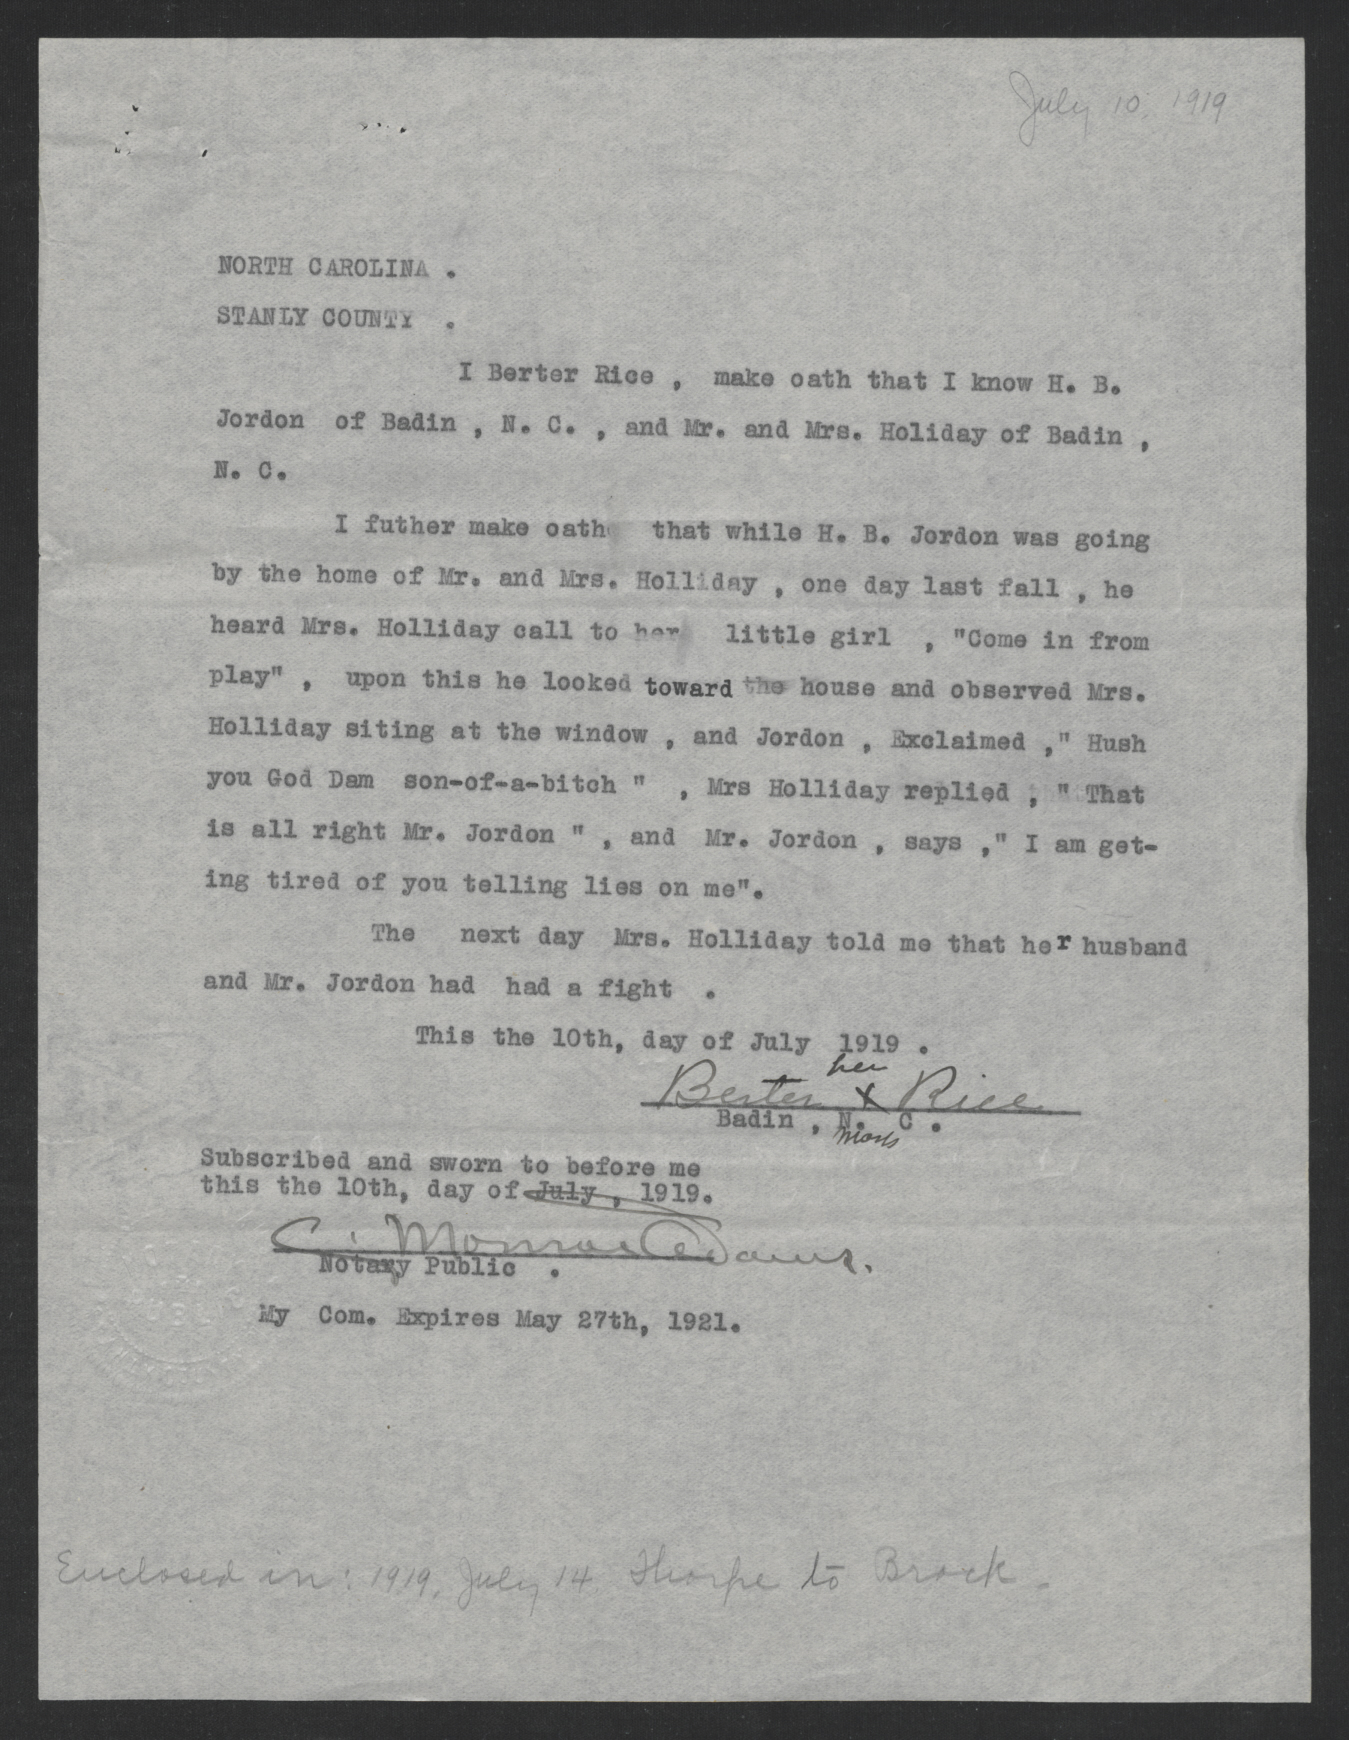 Affidavit of Berter Rice, July 10, 1919